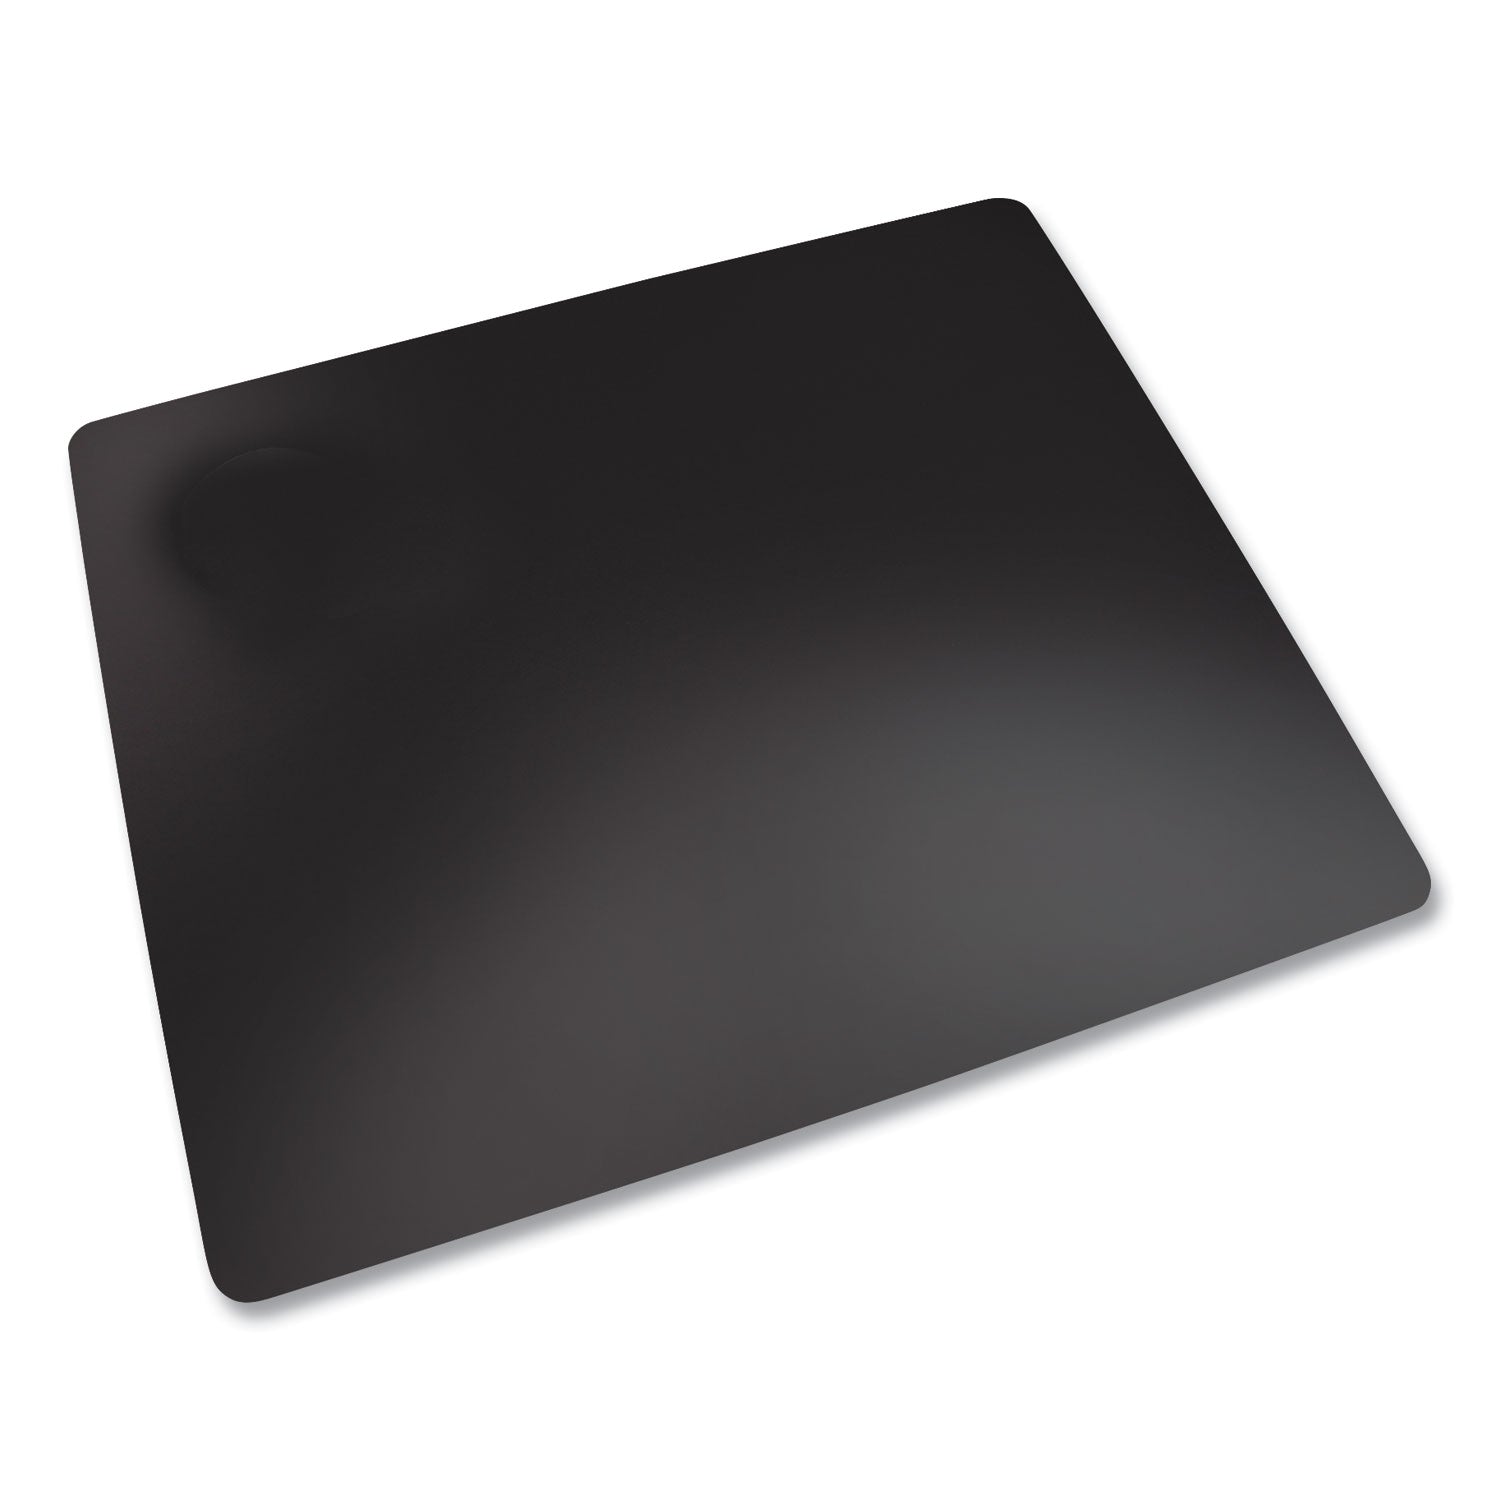 Rhinolin II Desk Pad with Antimicrobial Protection, 36 x 20, Black - 